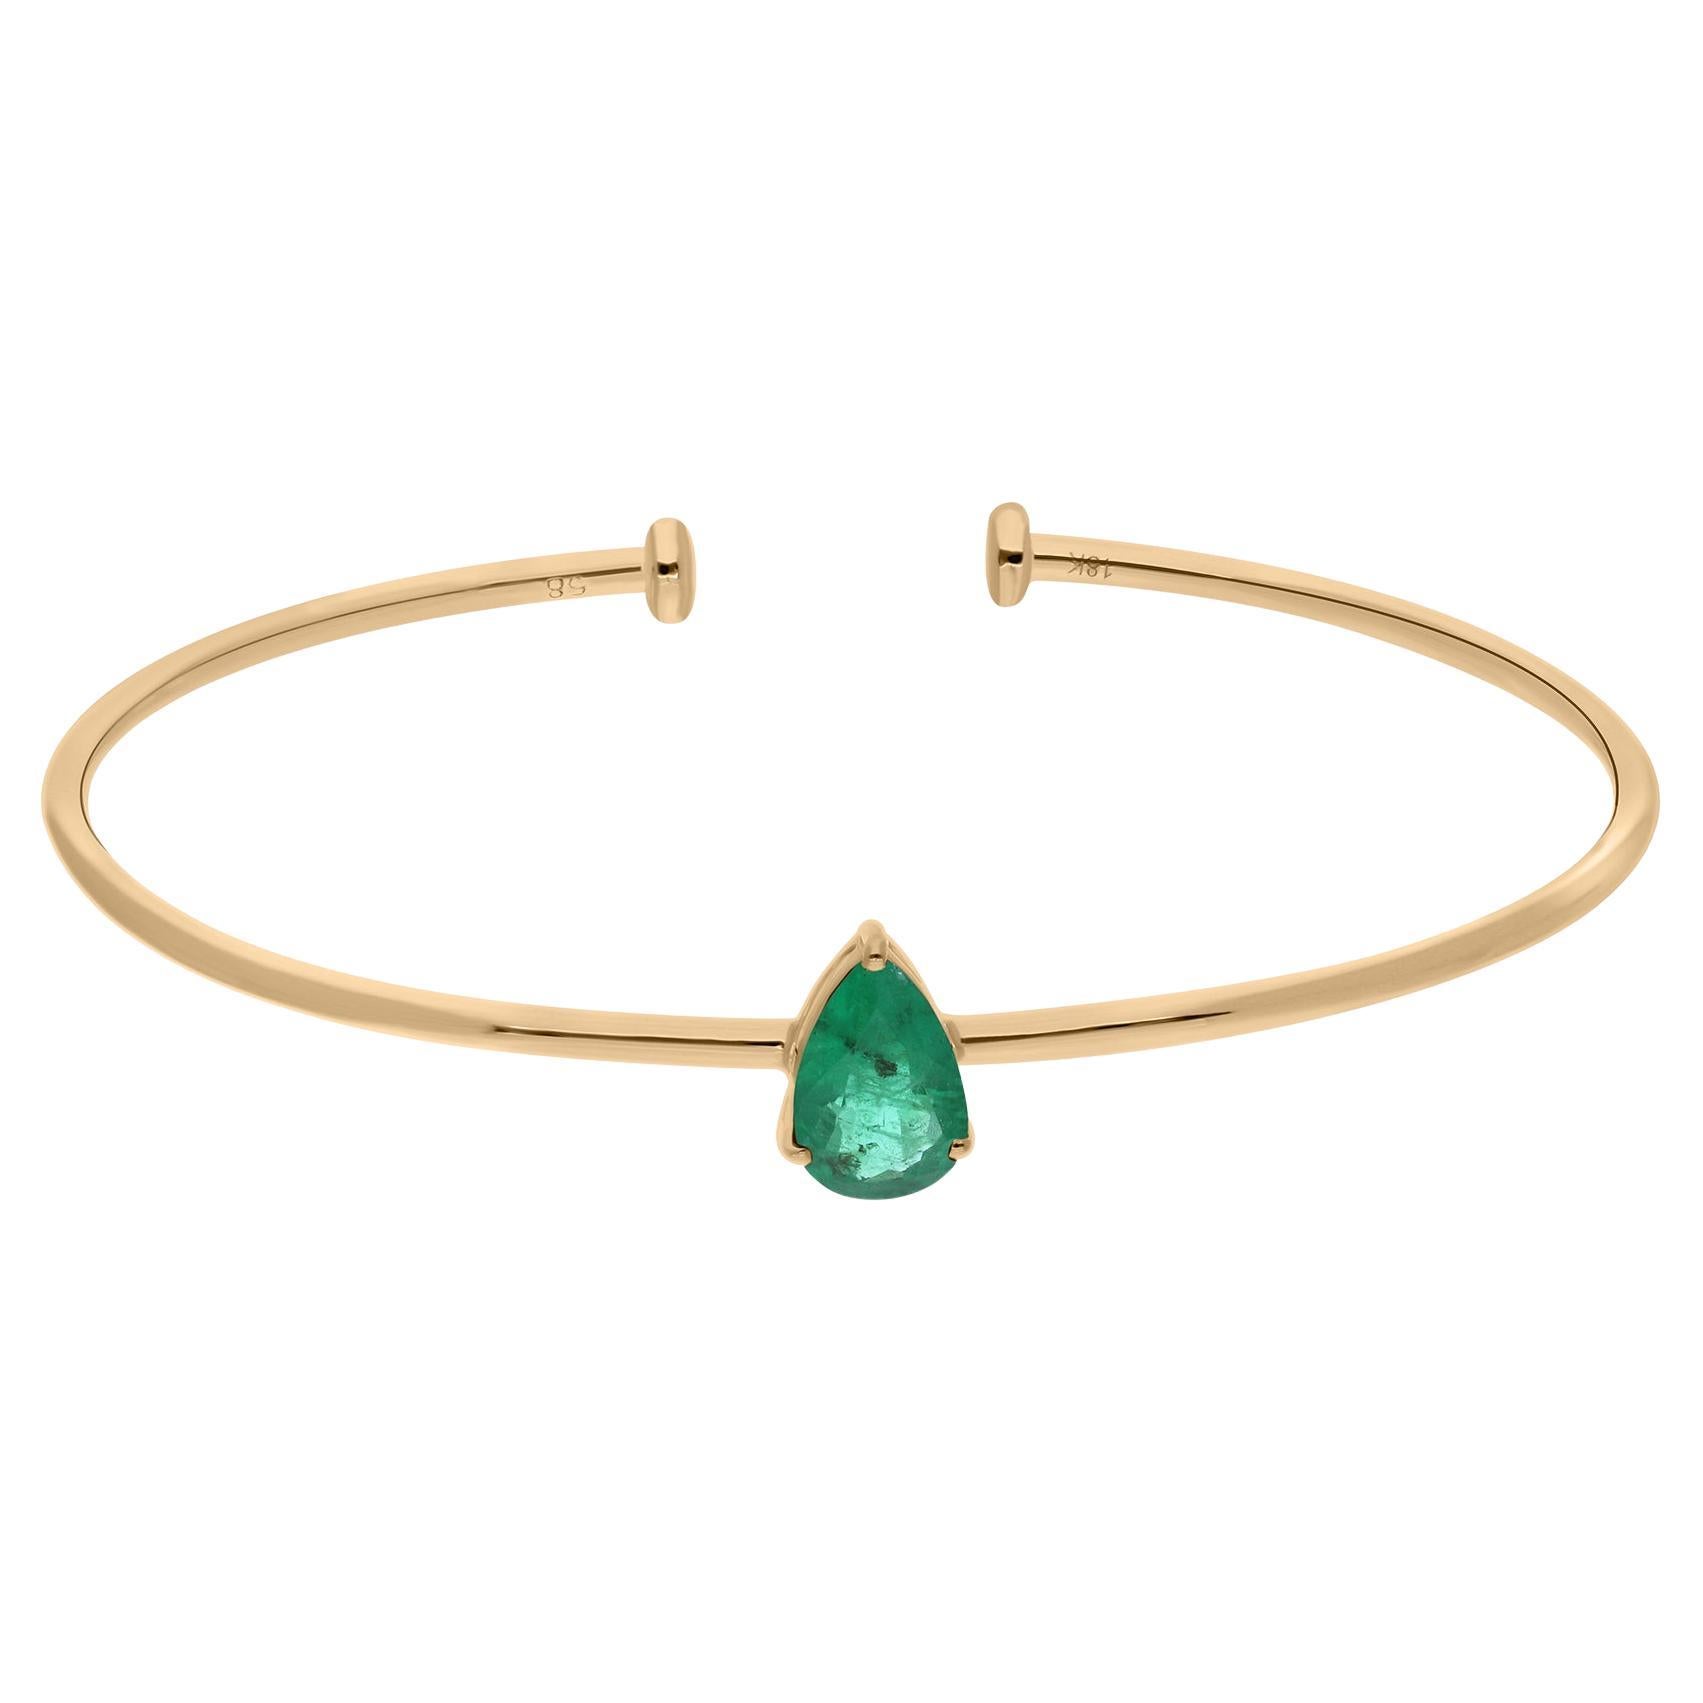 1.13 Carat Pear Zambian Emerald Gemstone Ring 14 Karat Yellow Gold Fine Jewelry